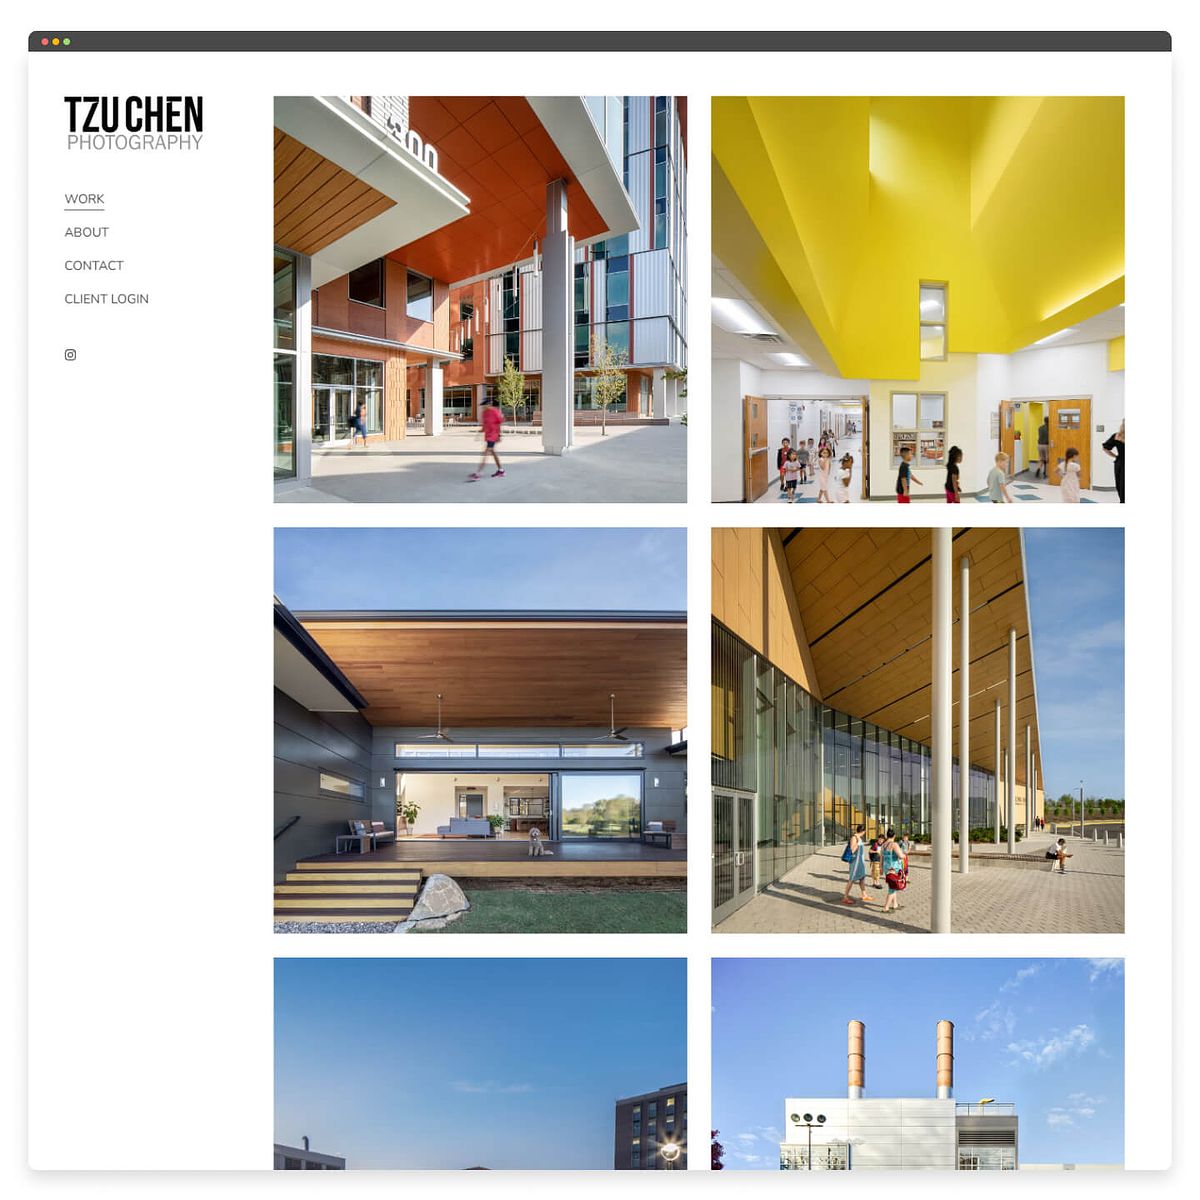 Tzu Chen – Architekturfotografen-Portfolio